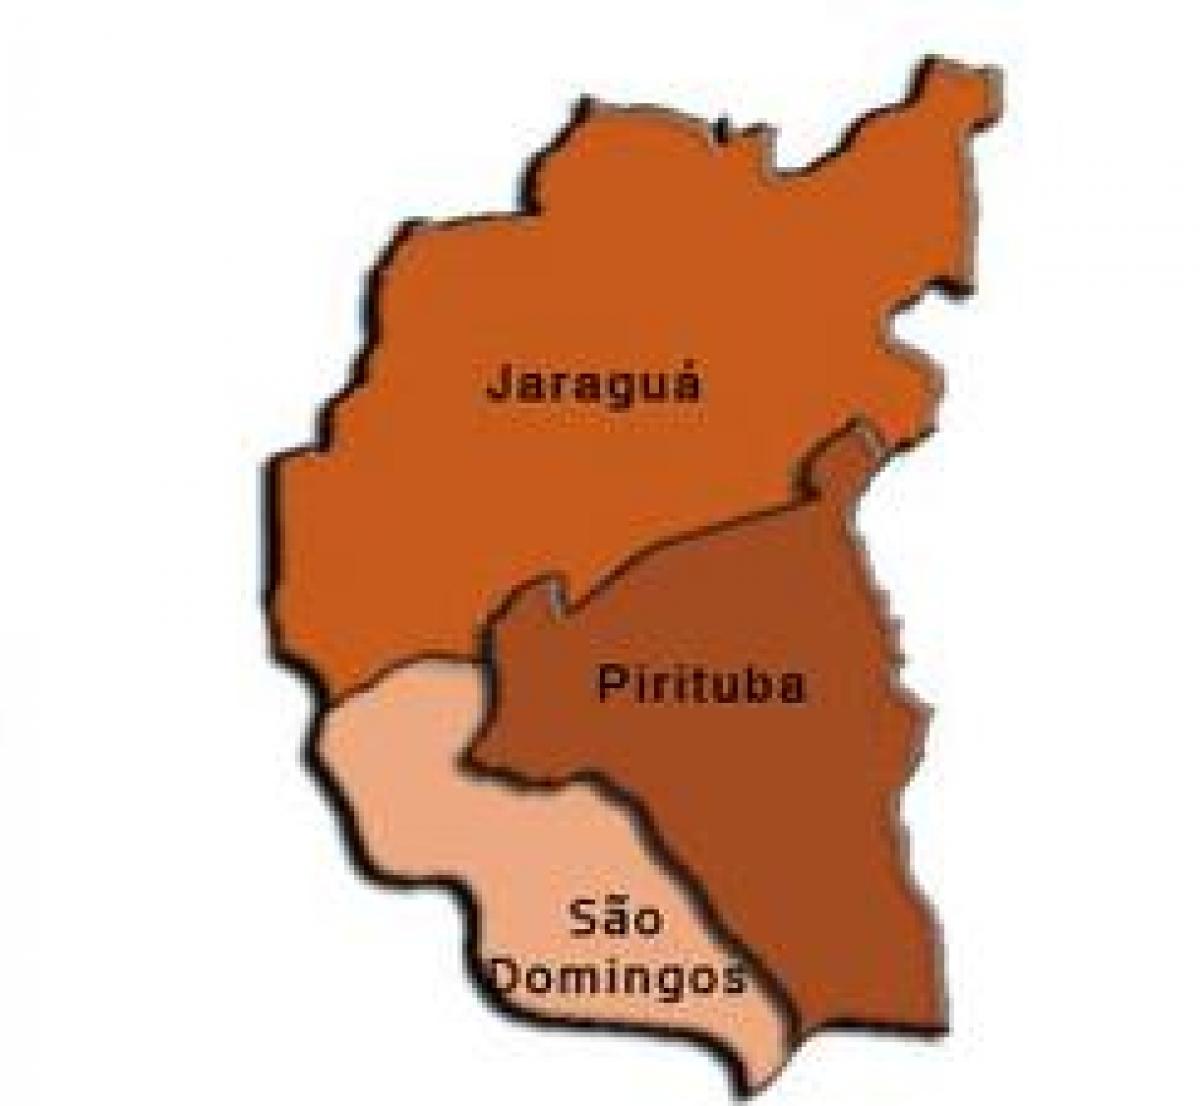 Carte Pirituba-Jaraguá sous-préfecture